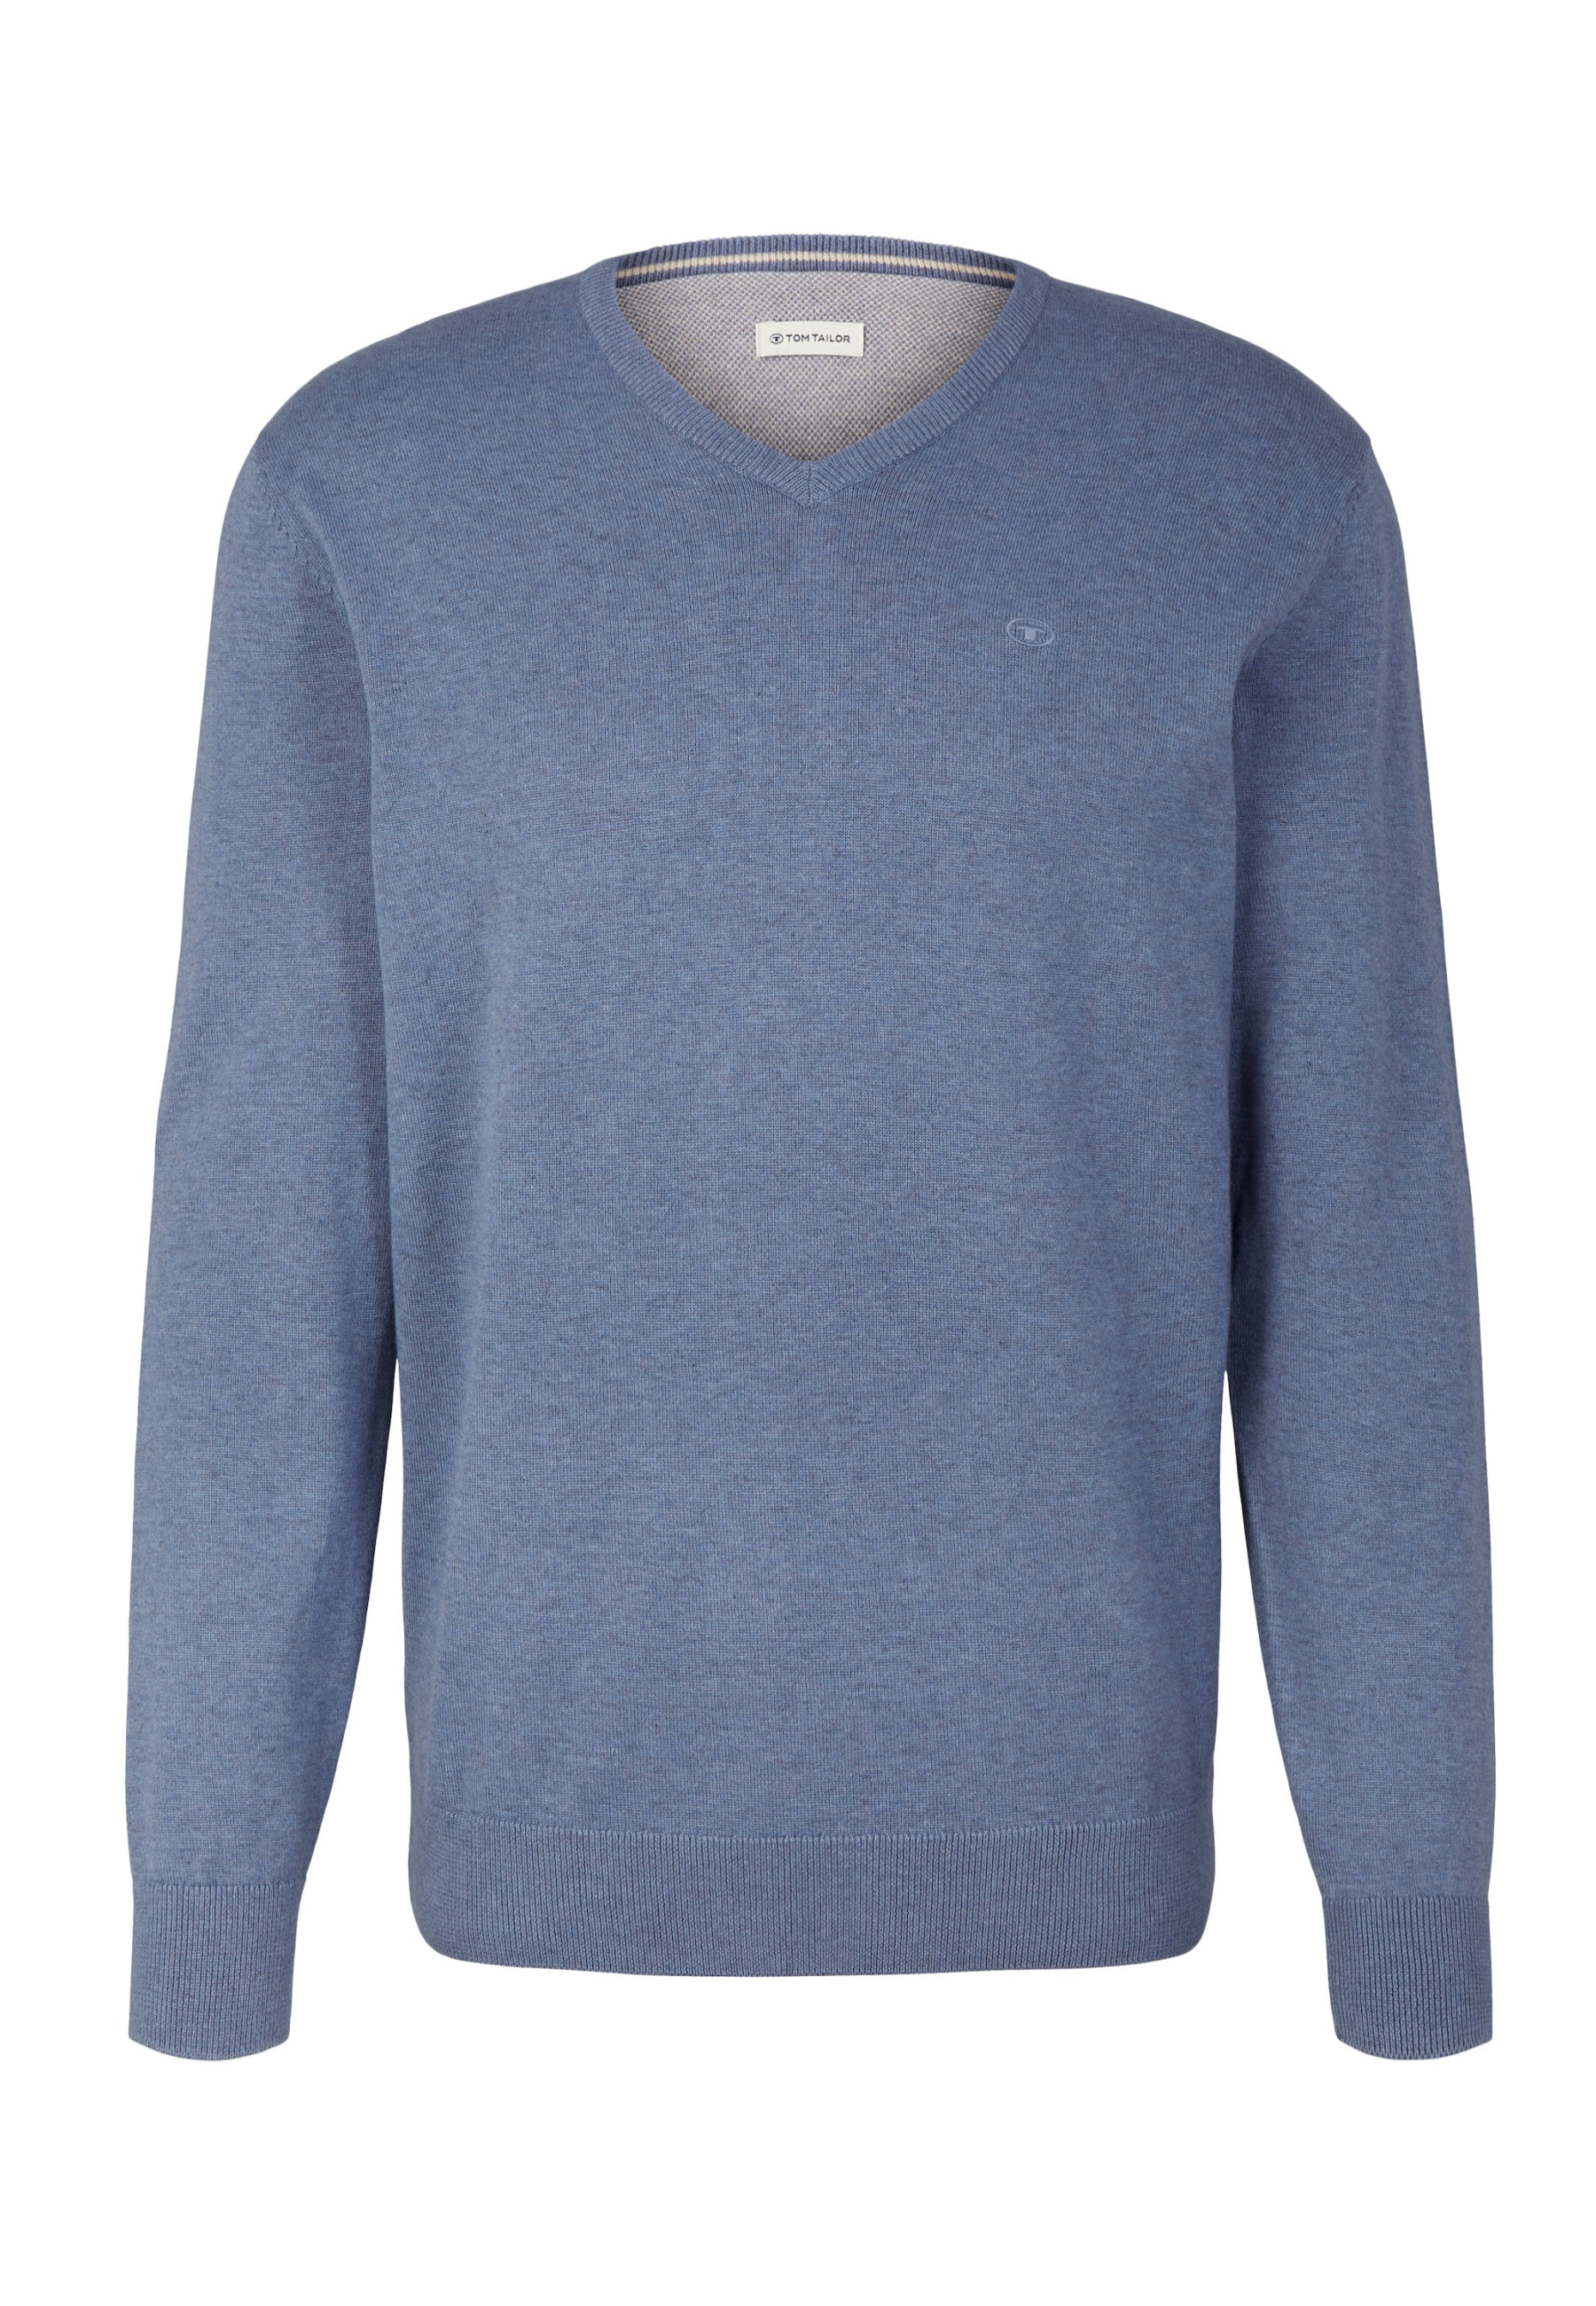 Пуловер Tom Tailor, синий